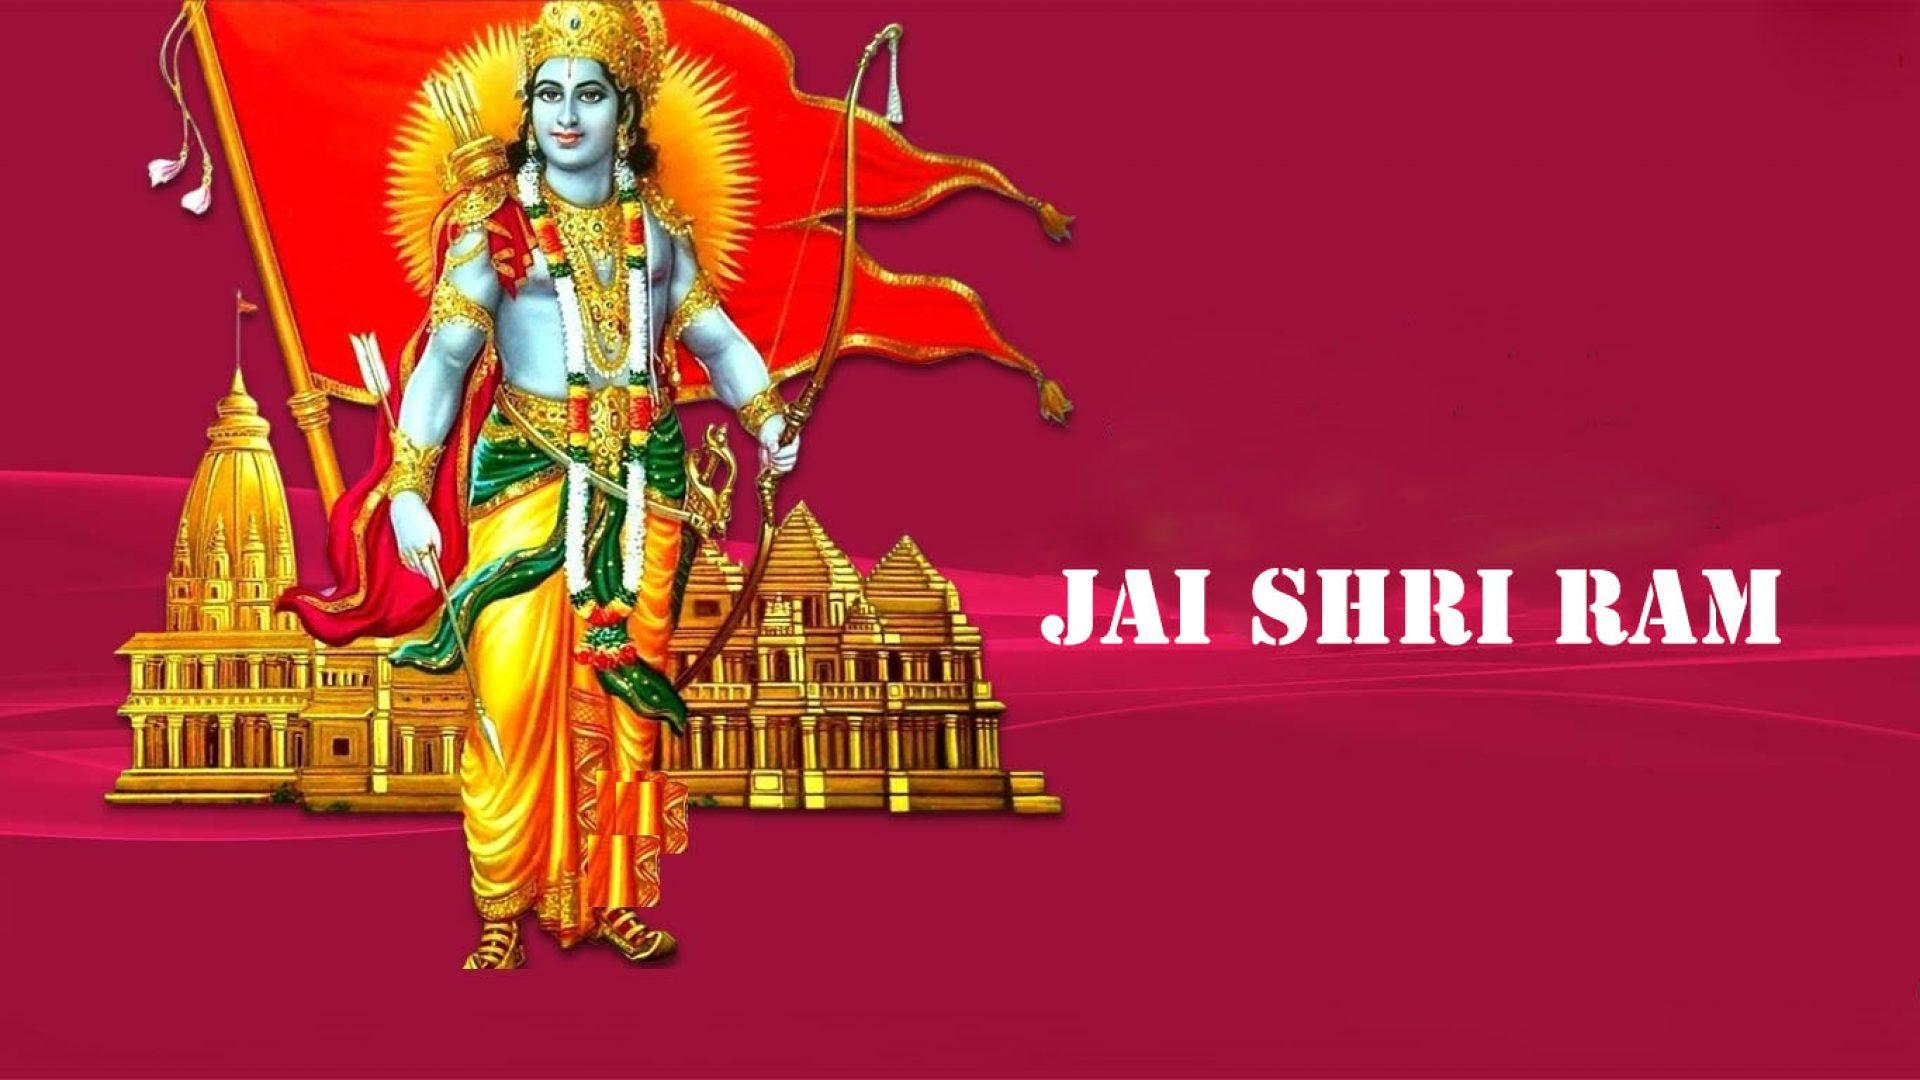 Jai Shri Ram Flag Image HD. Hindu Gods and Goddesses